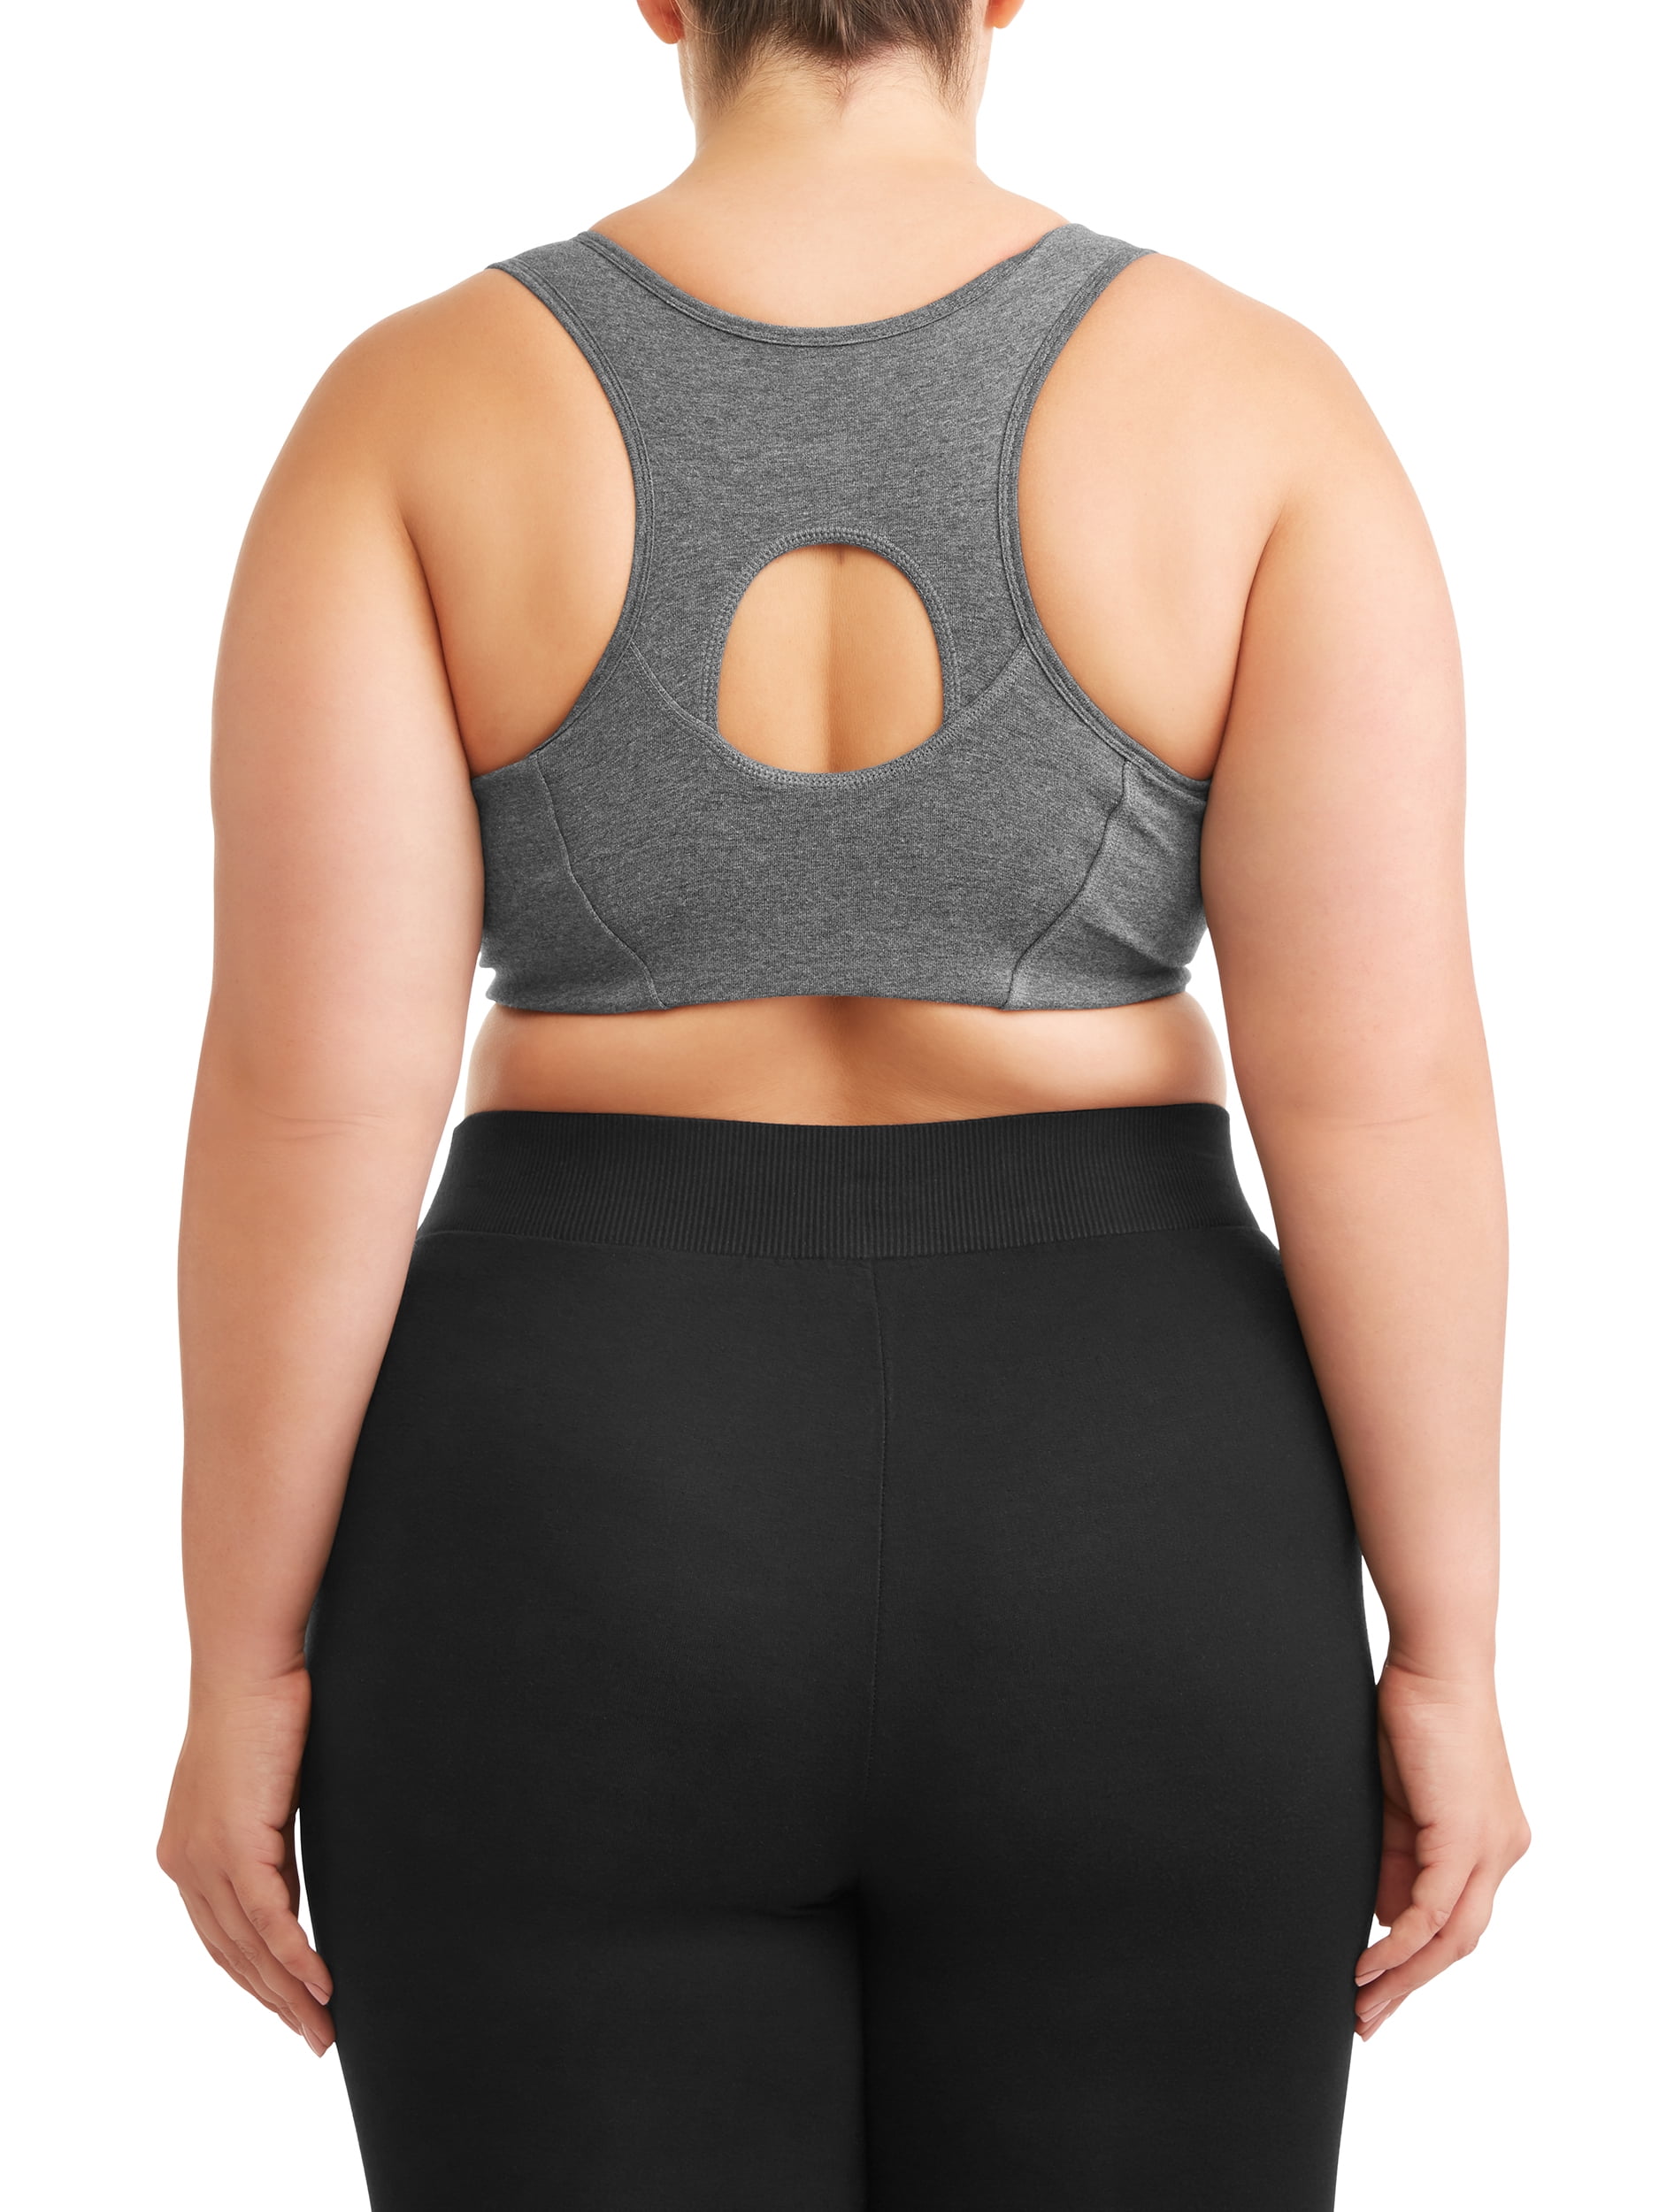  Oplxuo Plus Size Sports Bra for Women Front Zip Clouse